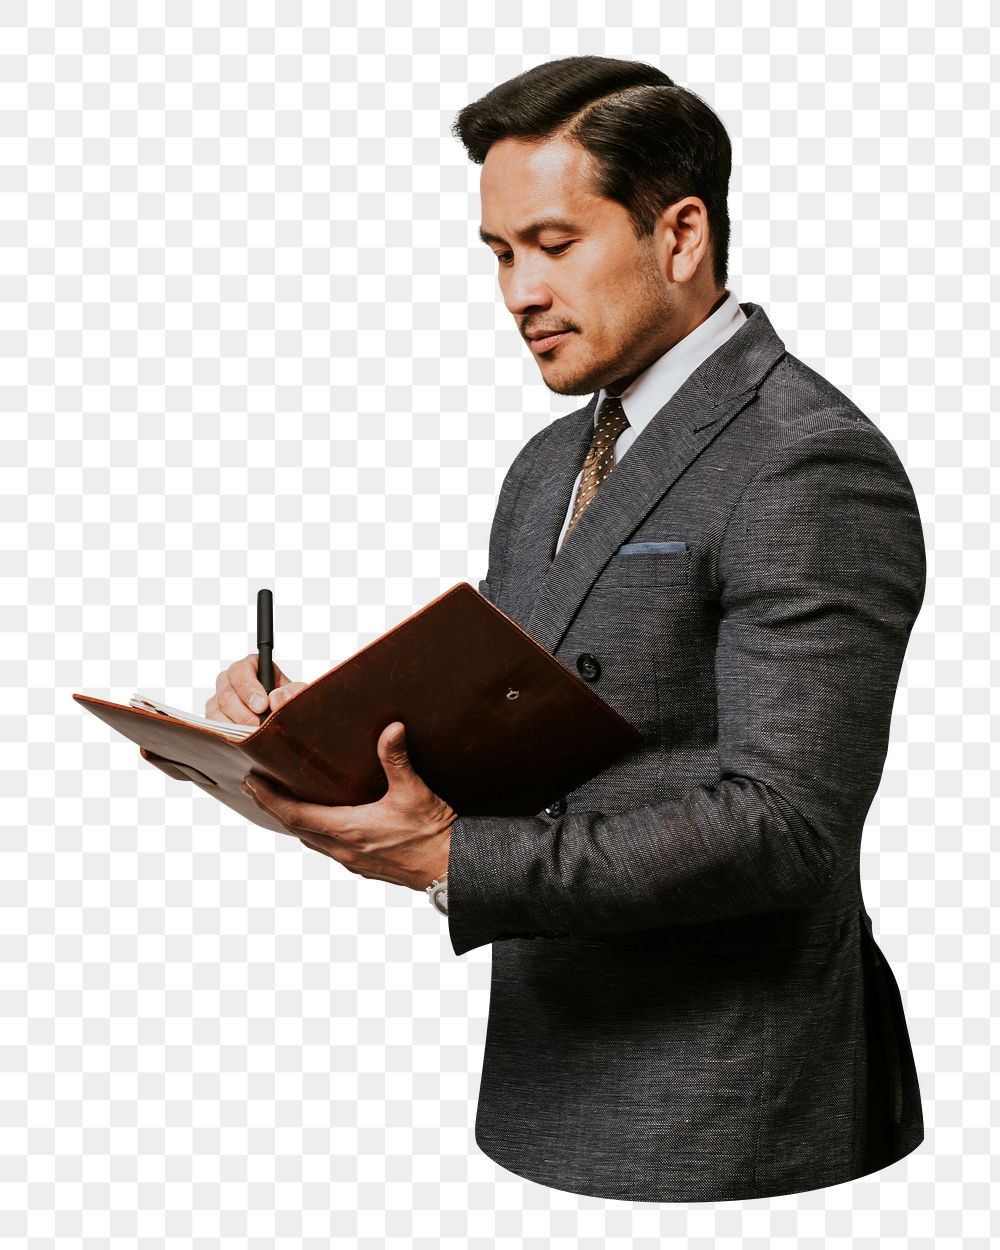 Businessman signing document png sticker, transparent background